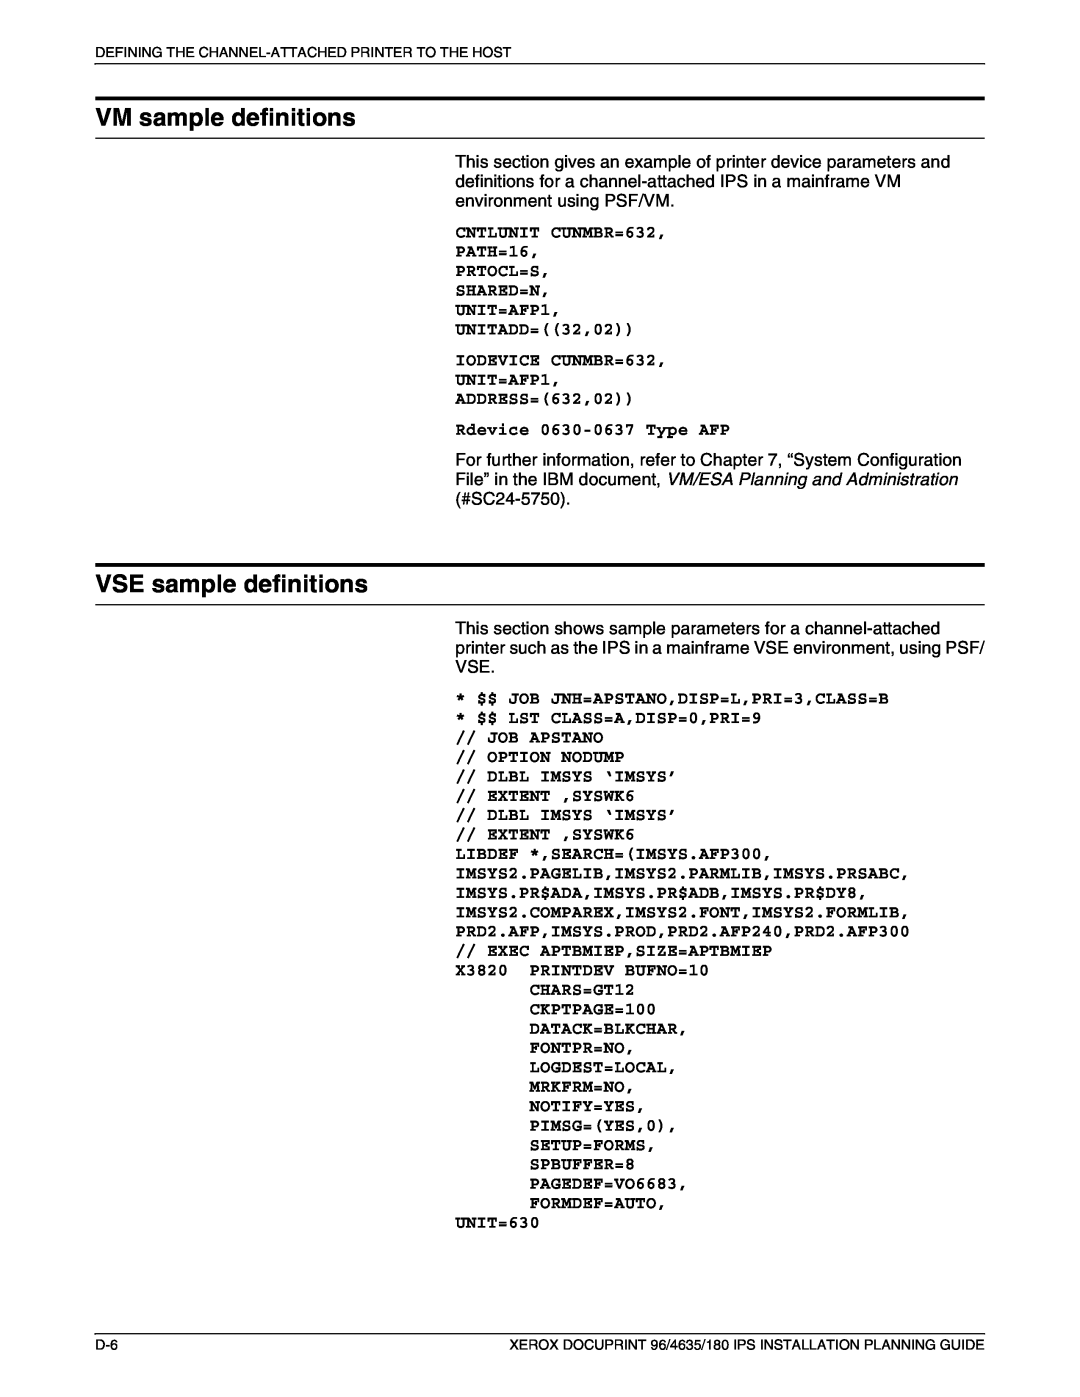 Xerox 180 IPS manual VM sample definitions, VSE sample definitions 